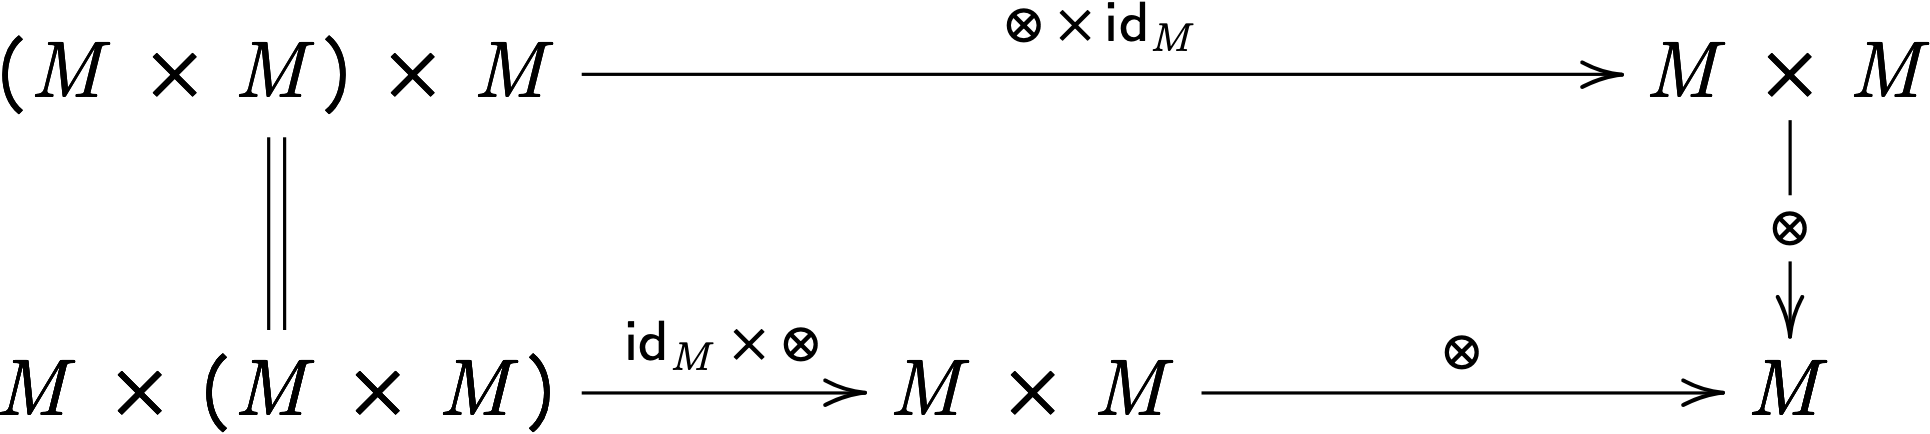 Commutative diagram for associativity axiom for a monoid.